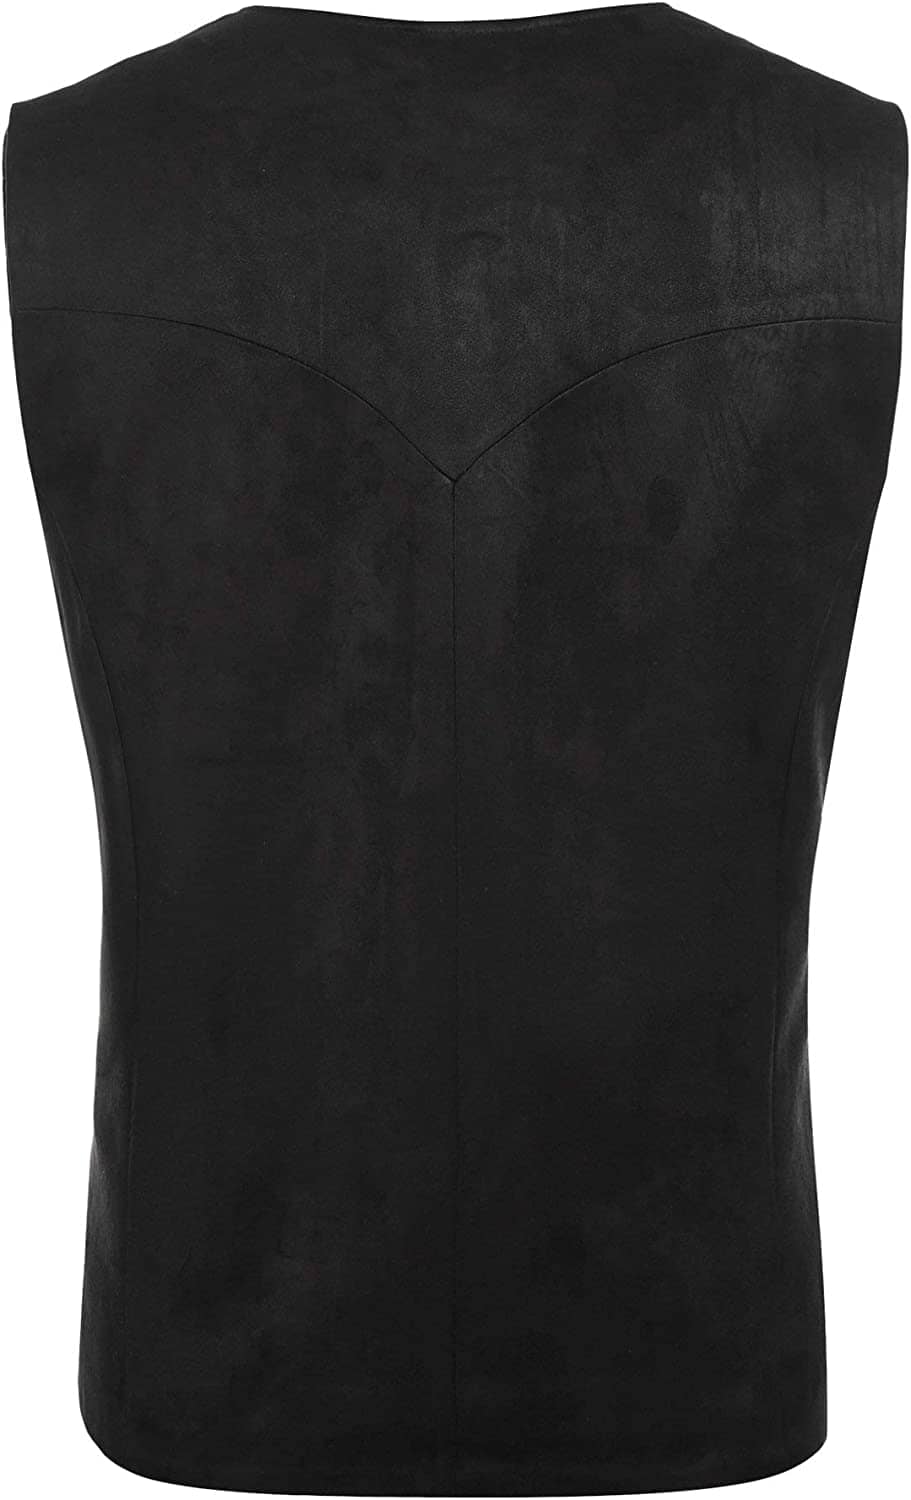 Western Suede Leather Vest Suit (US Only) Vest Coofandy's 